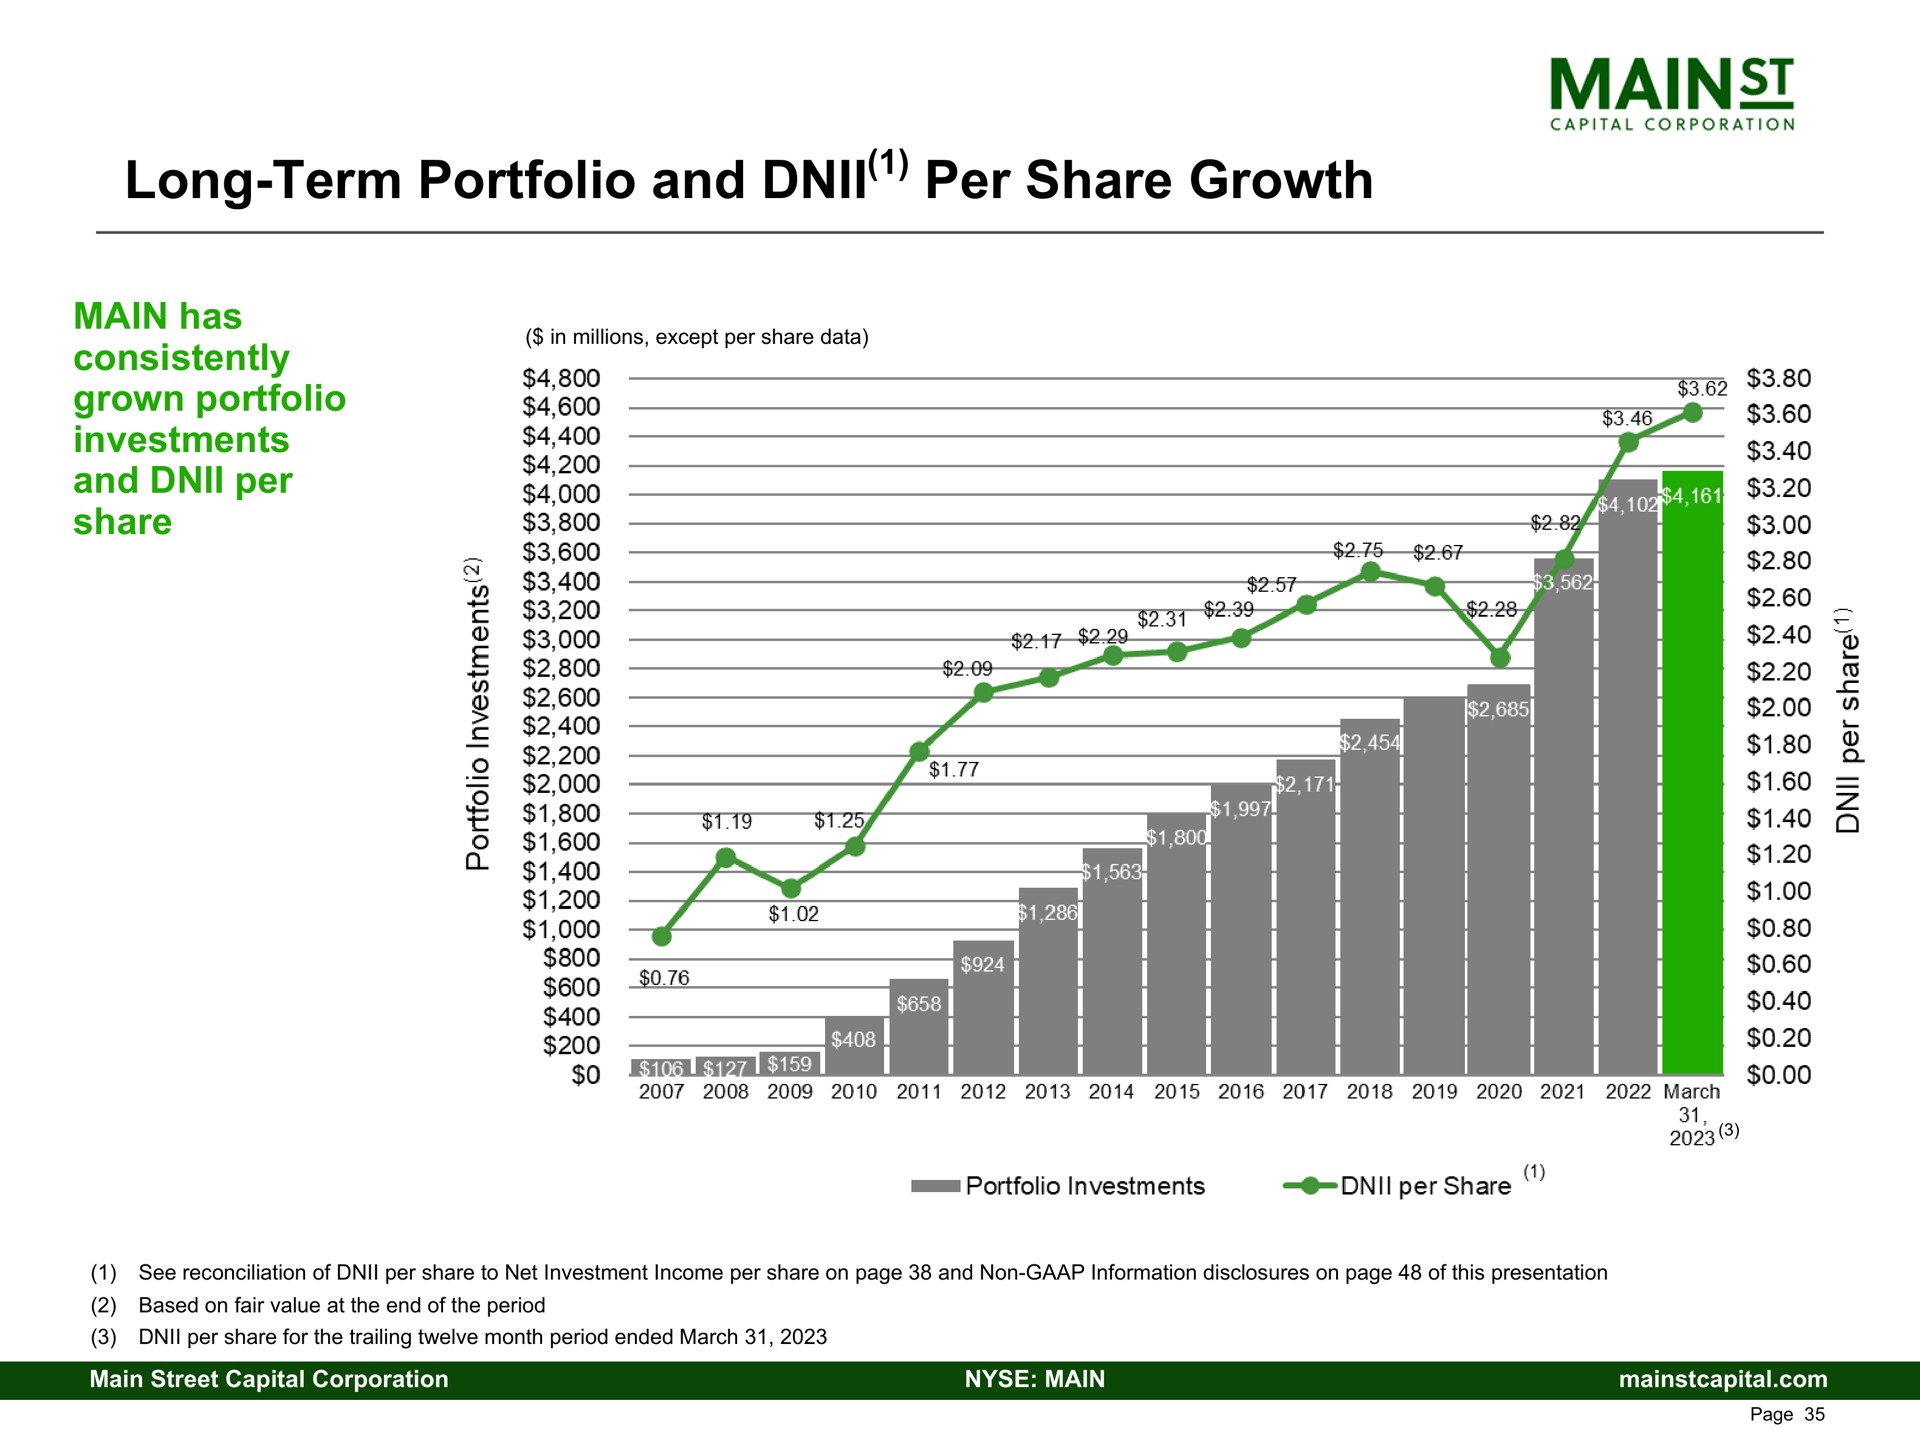 long term portfolio and per share growth ore toon an son | Main Street Capital